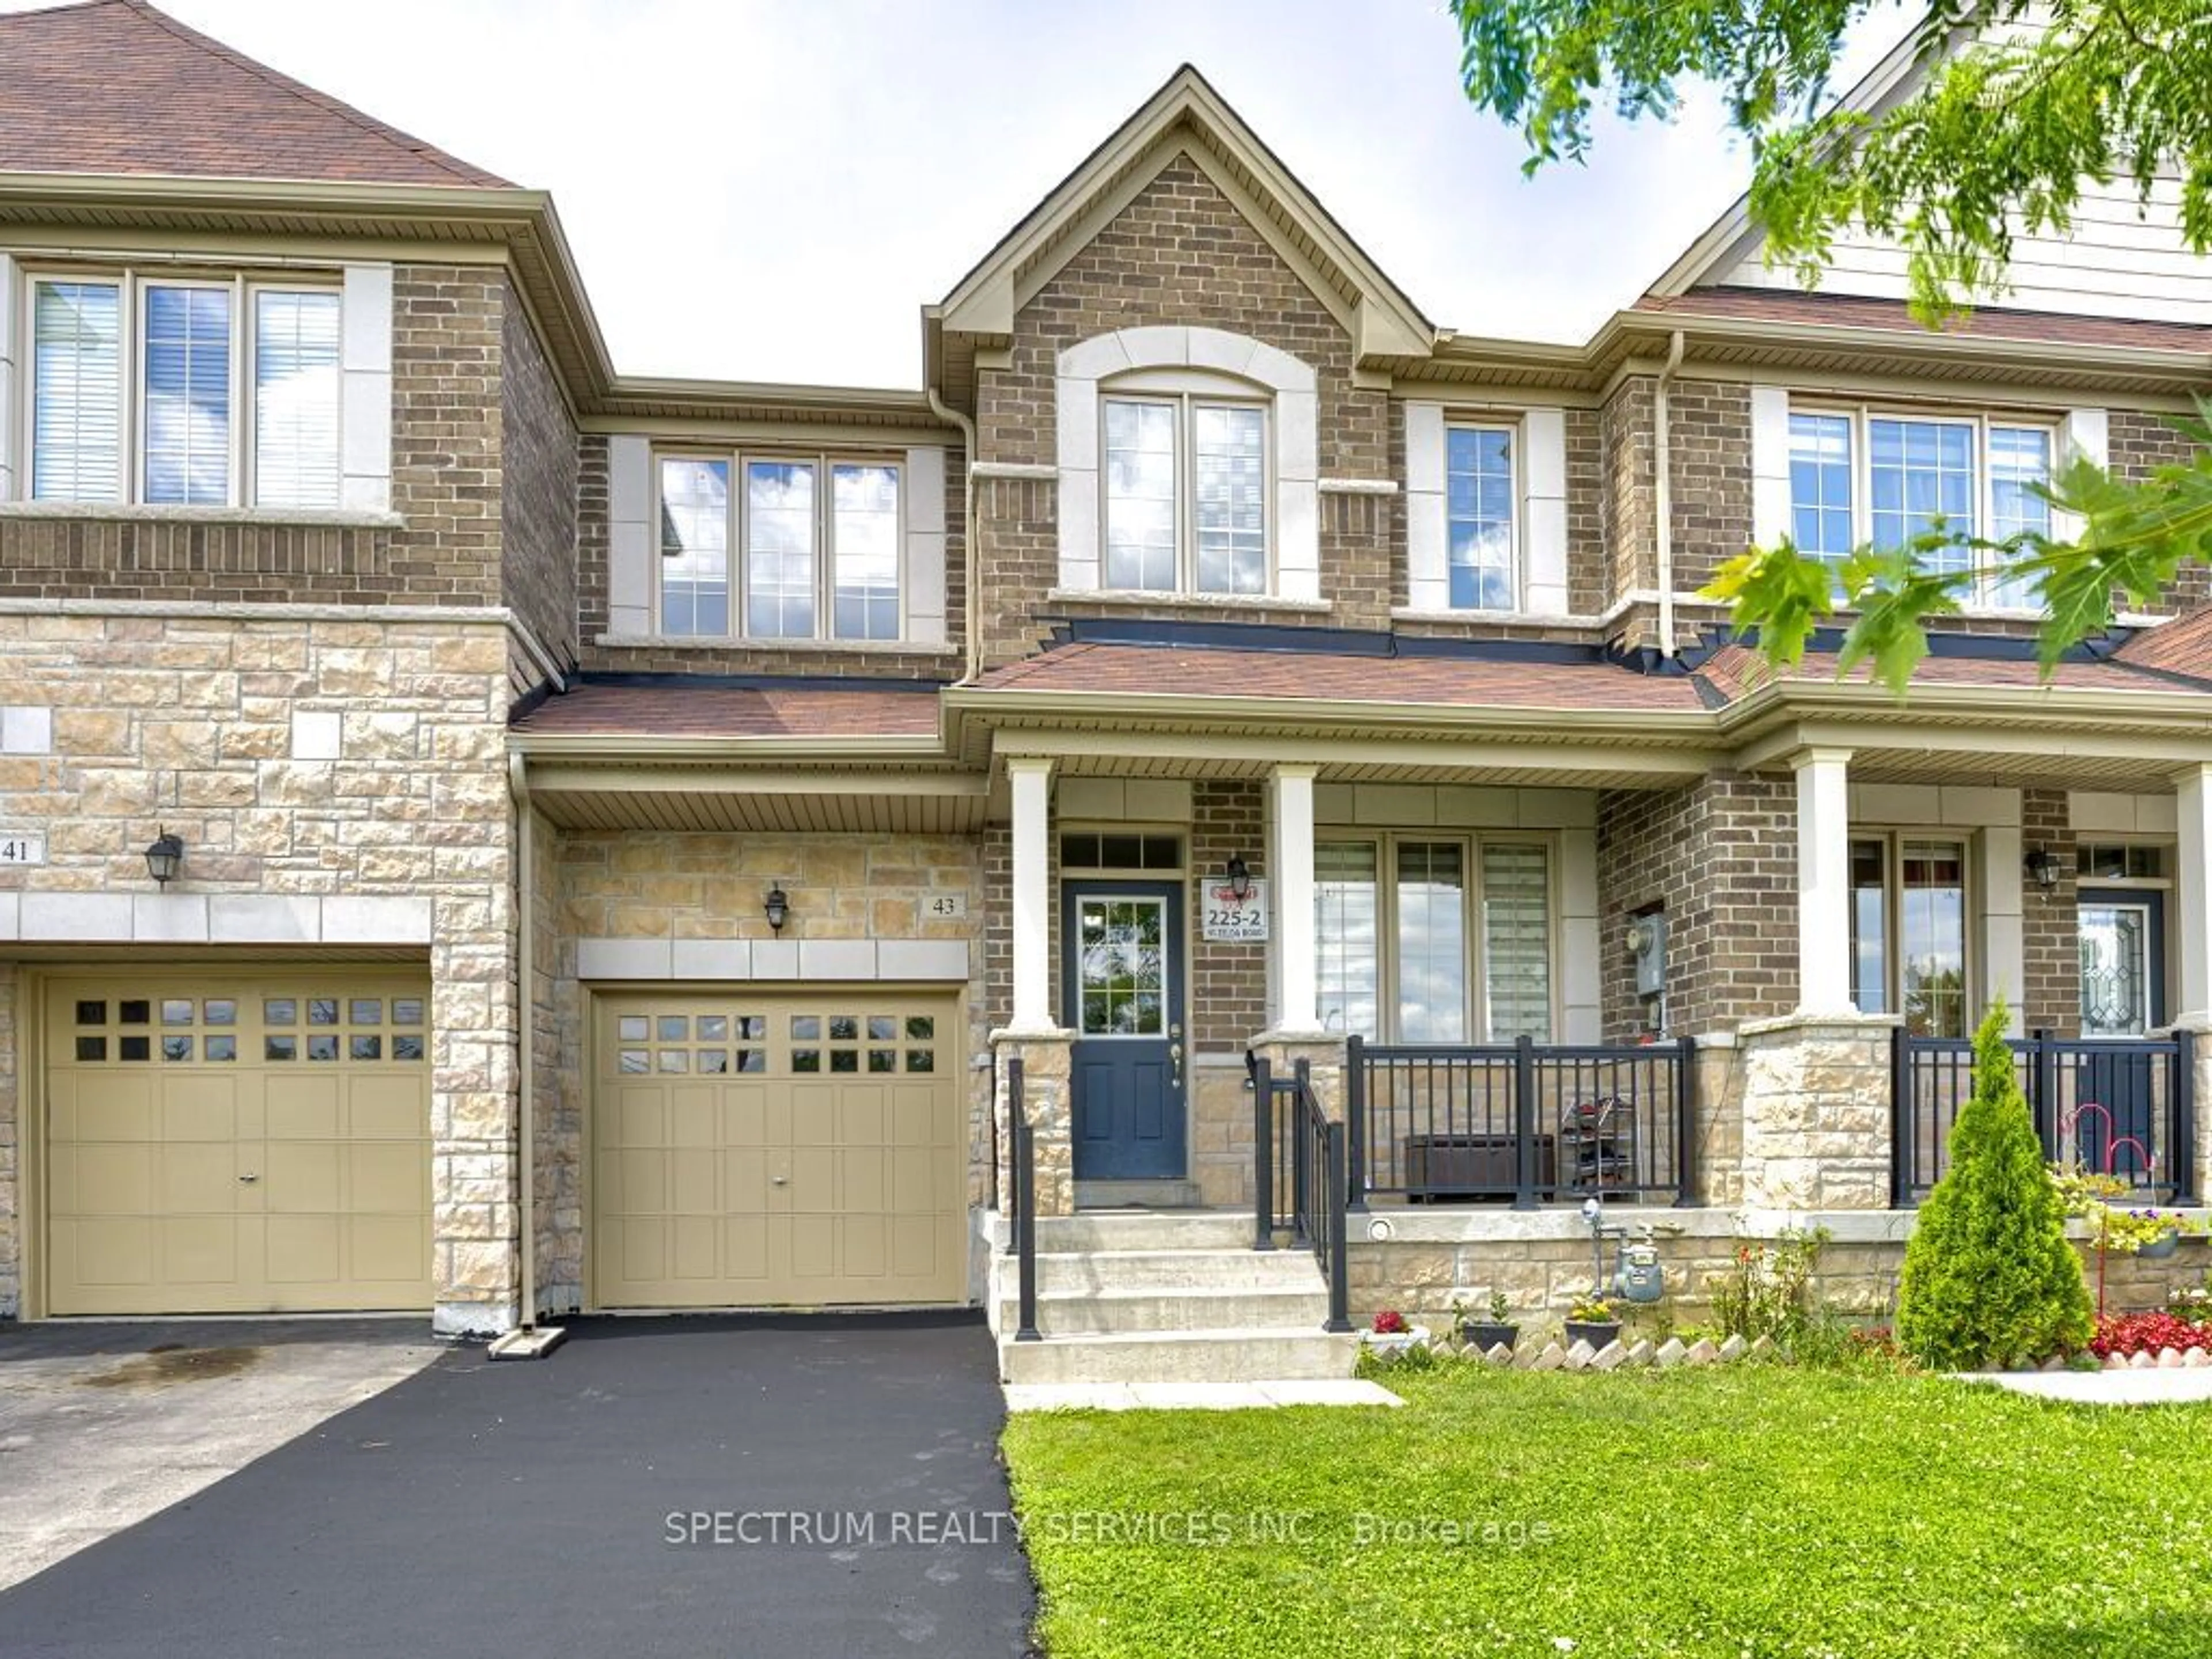 Home with brick exterior material for 43 Zelda Rd, Brampton Ontario L6R 0B6